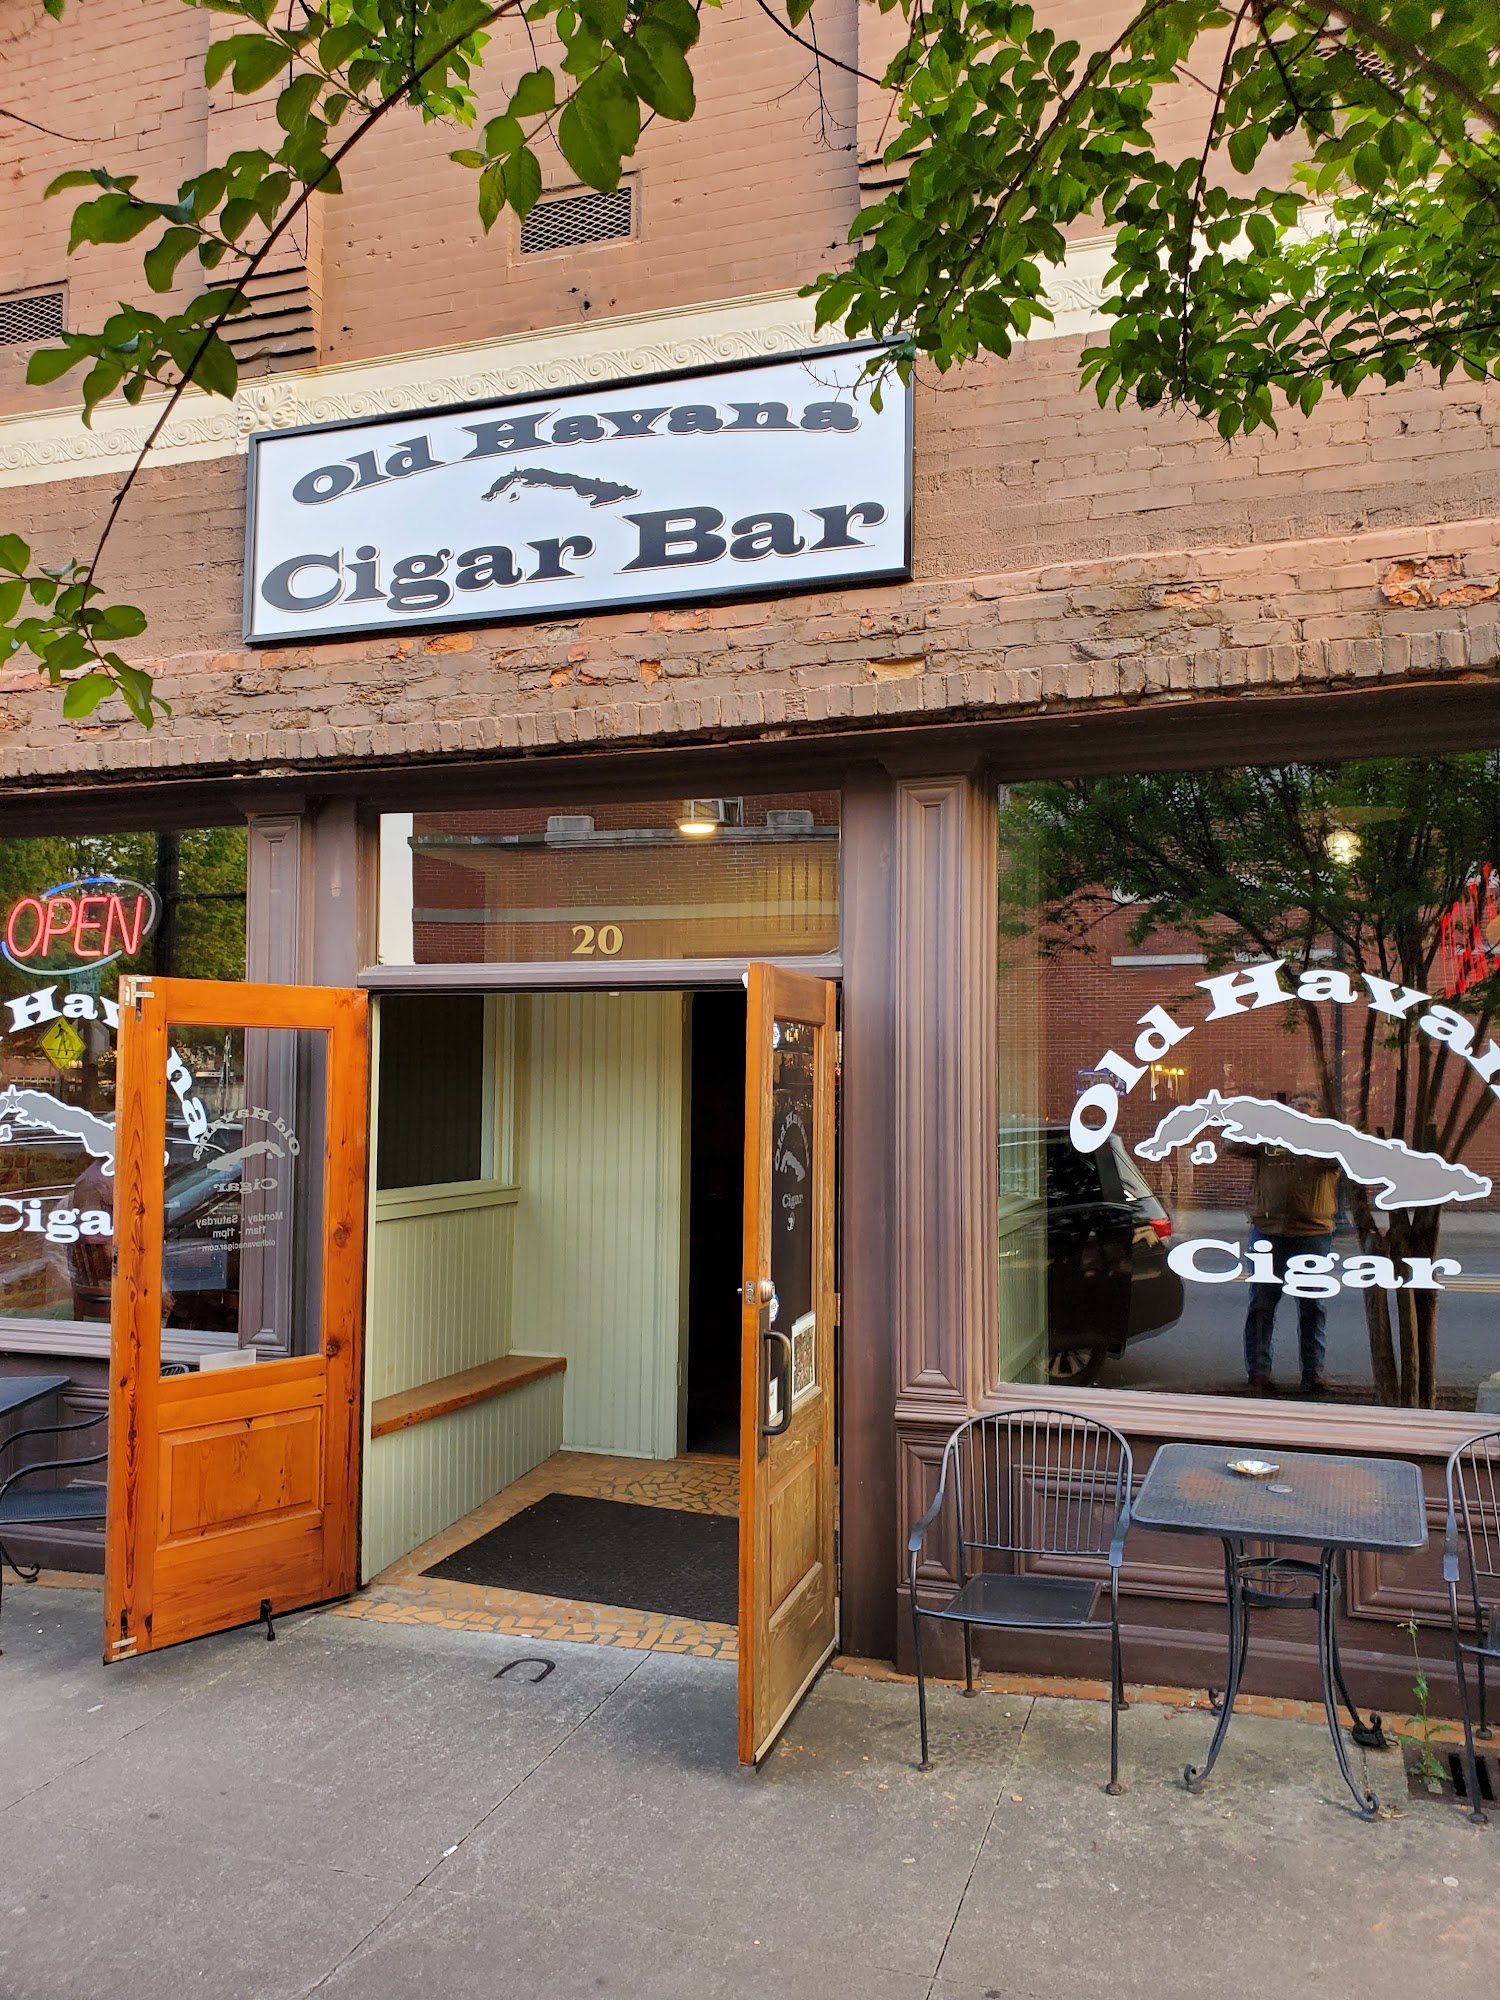 Old Havana Cigar Bar